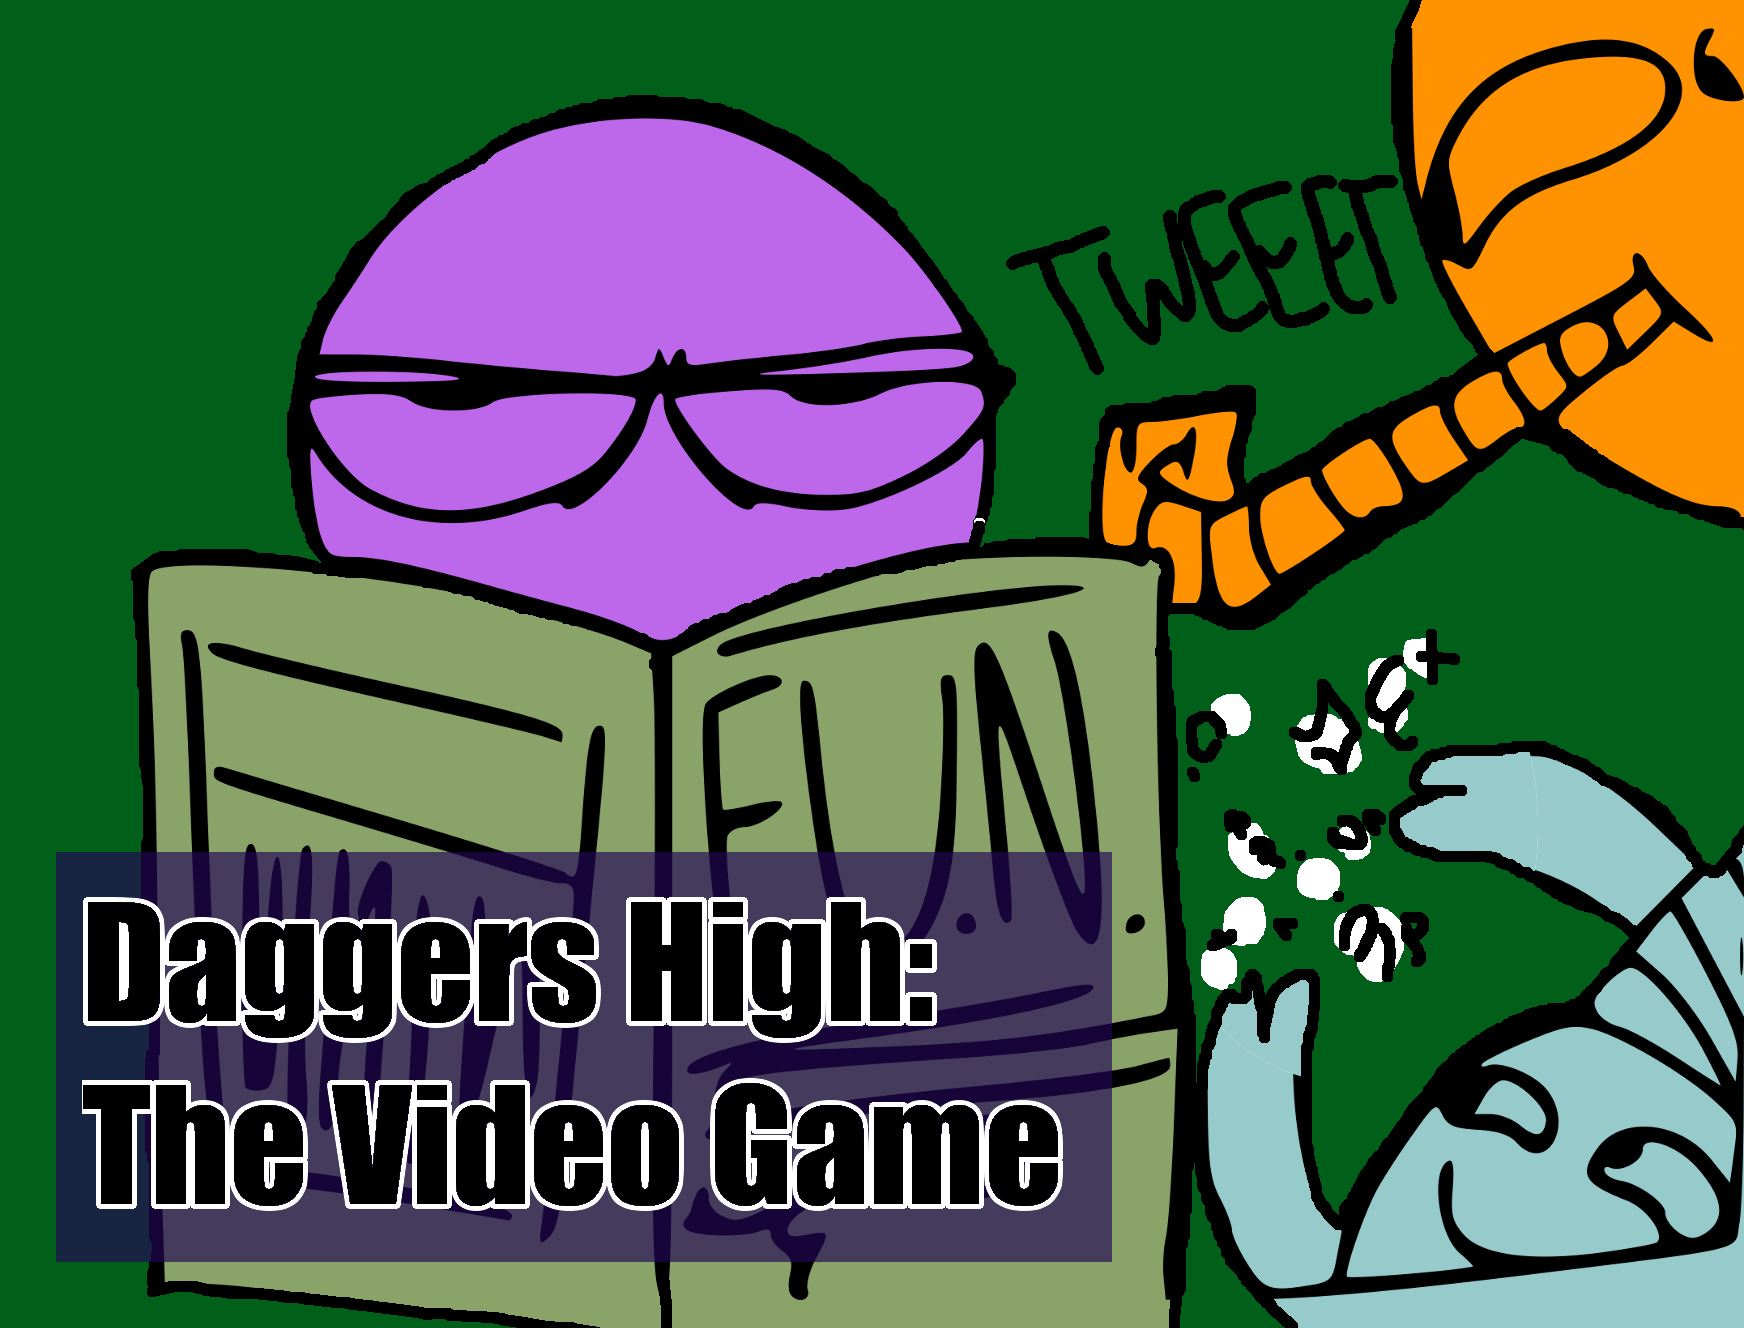 Daggers High Video Game